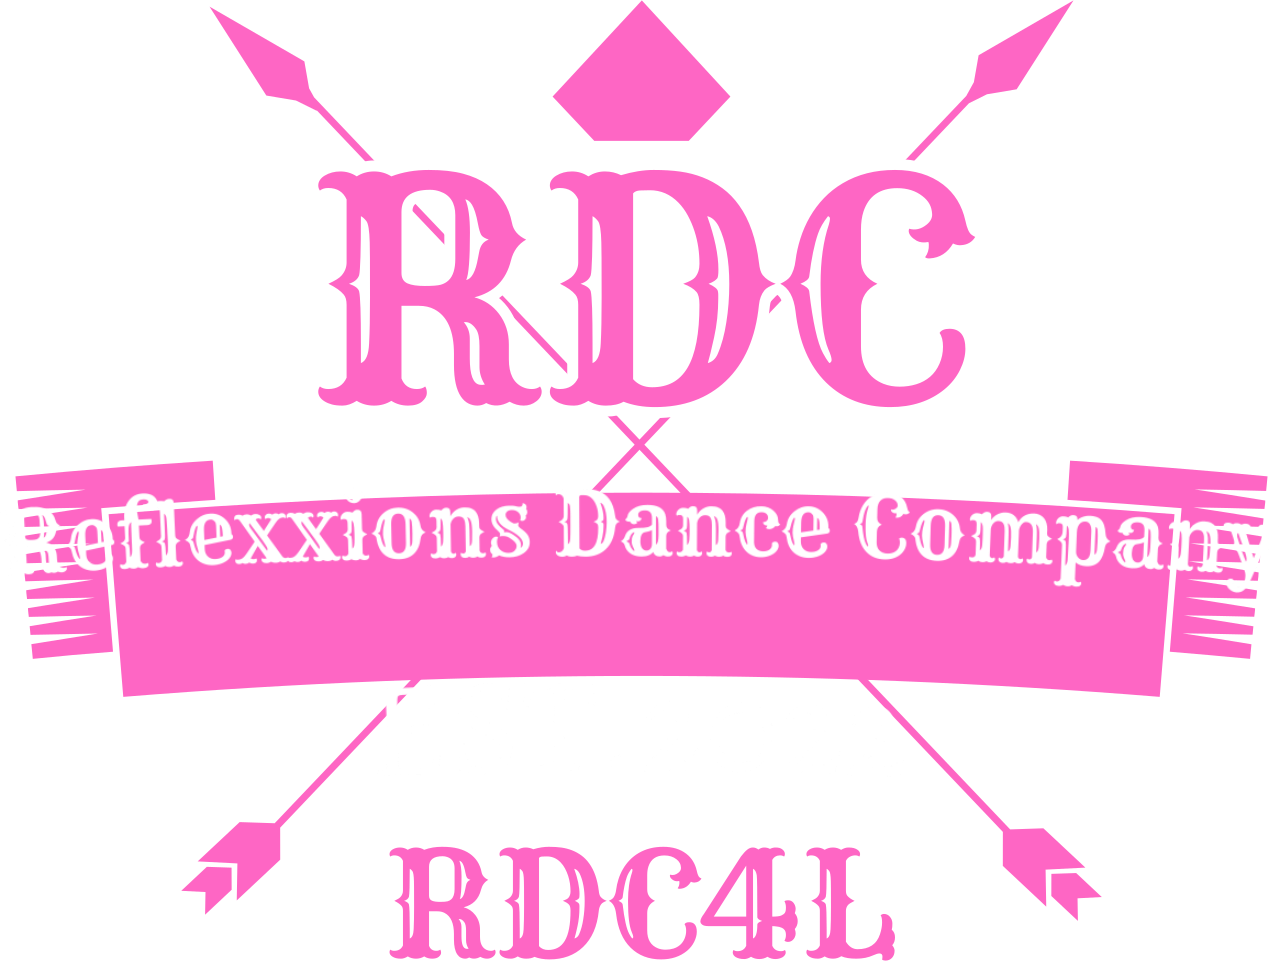 Reflexxions Dance Company's web page